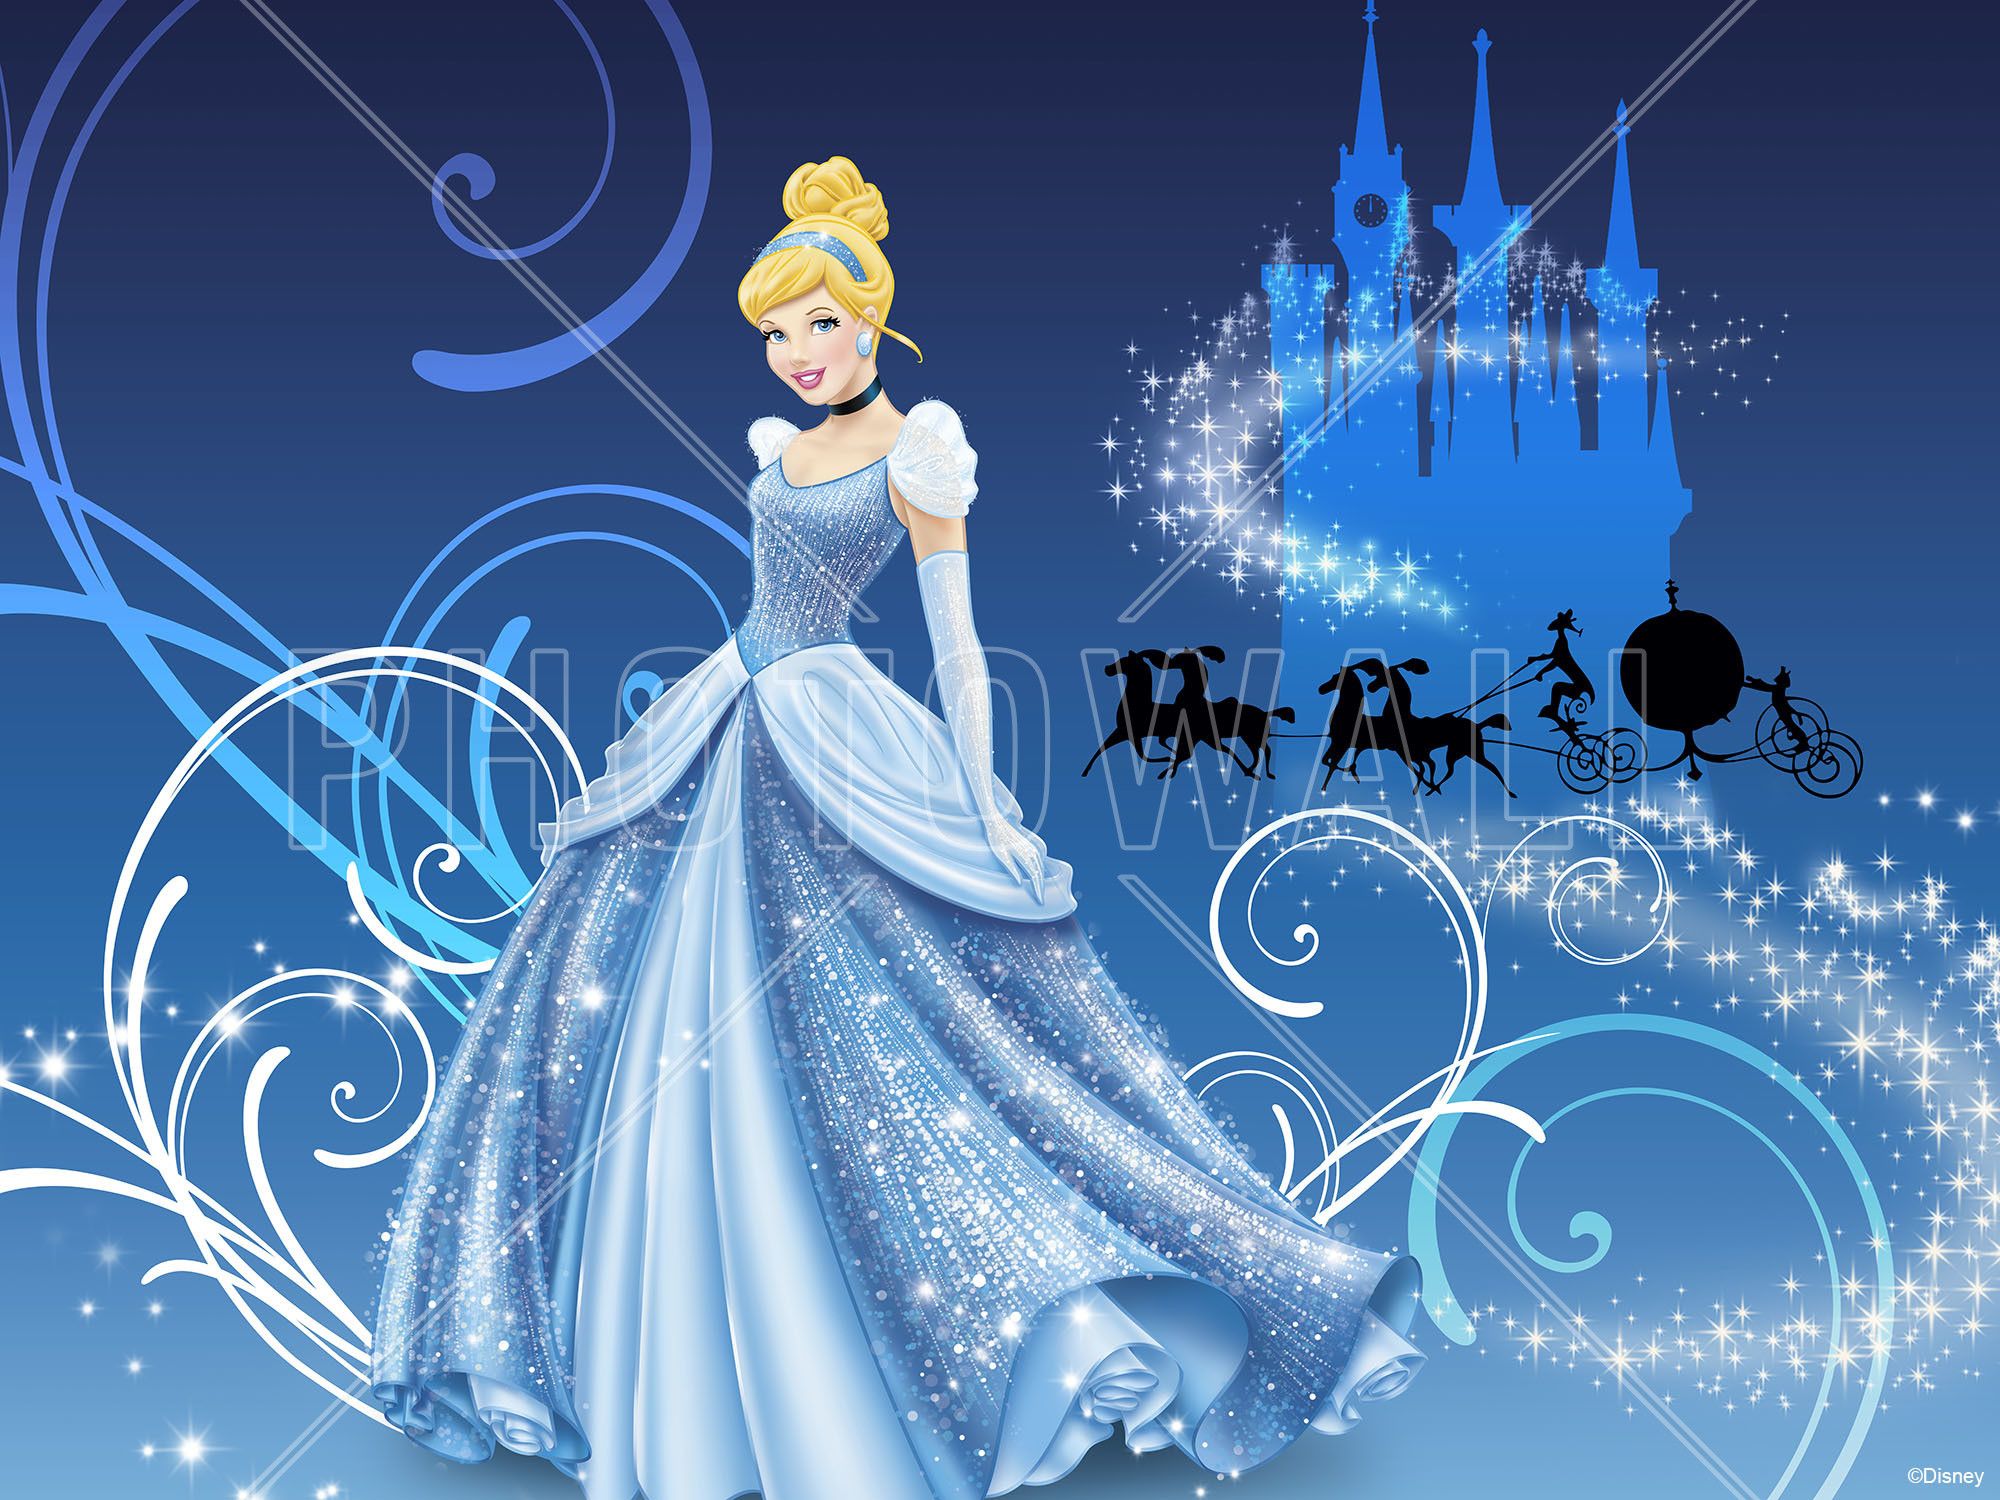 Disney princess cinderella s on